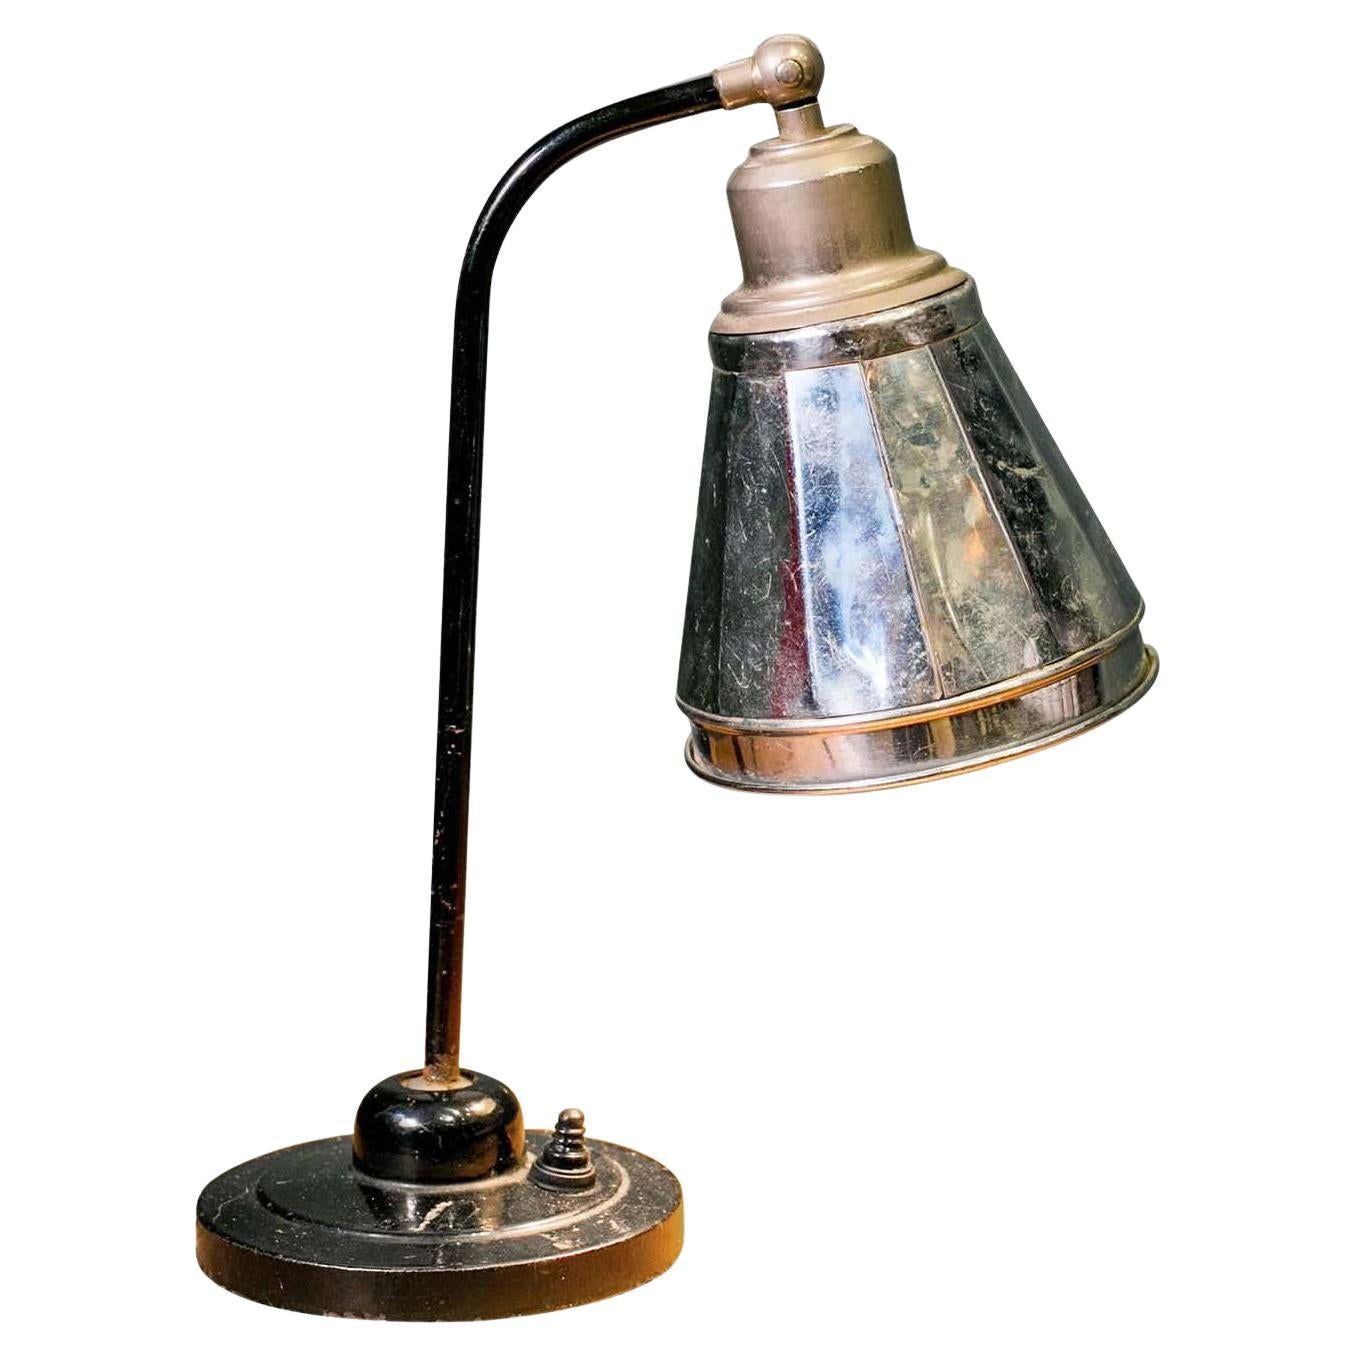 Reflective French Art Deco Style Gooseneck Table Lamp, circa 1930